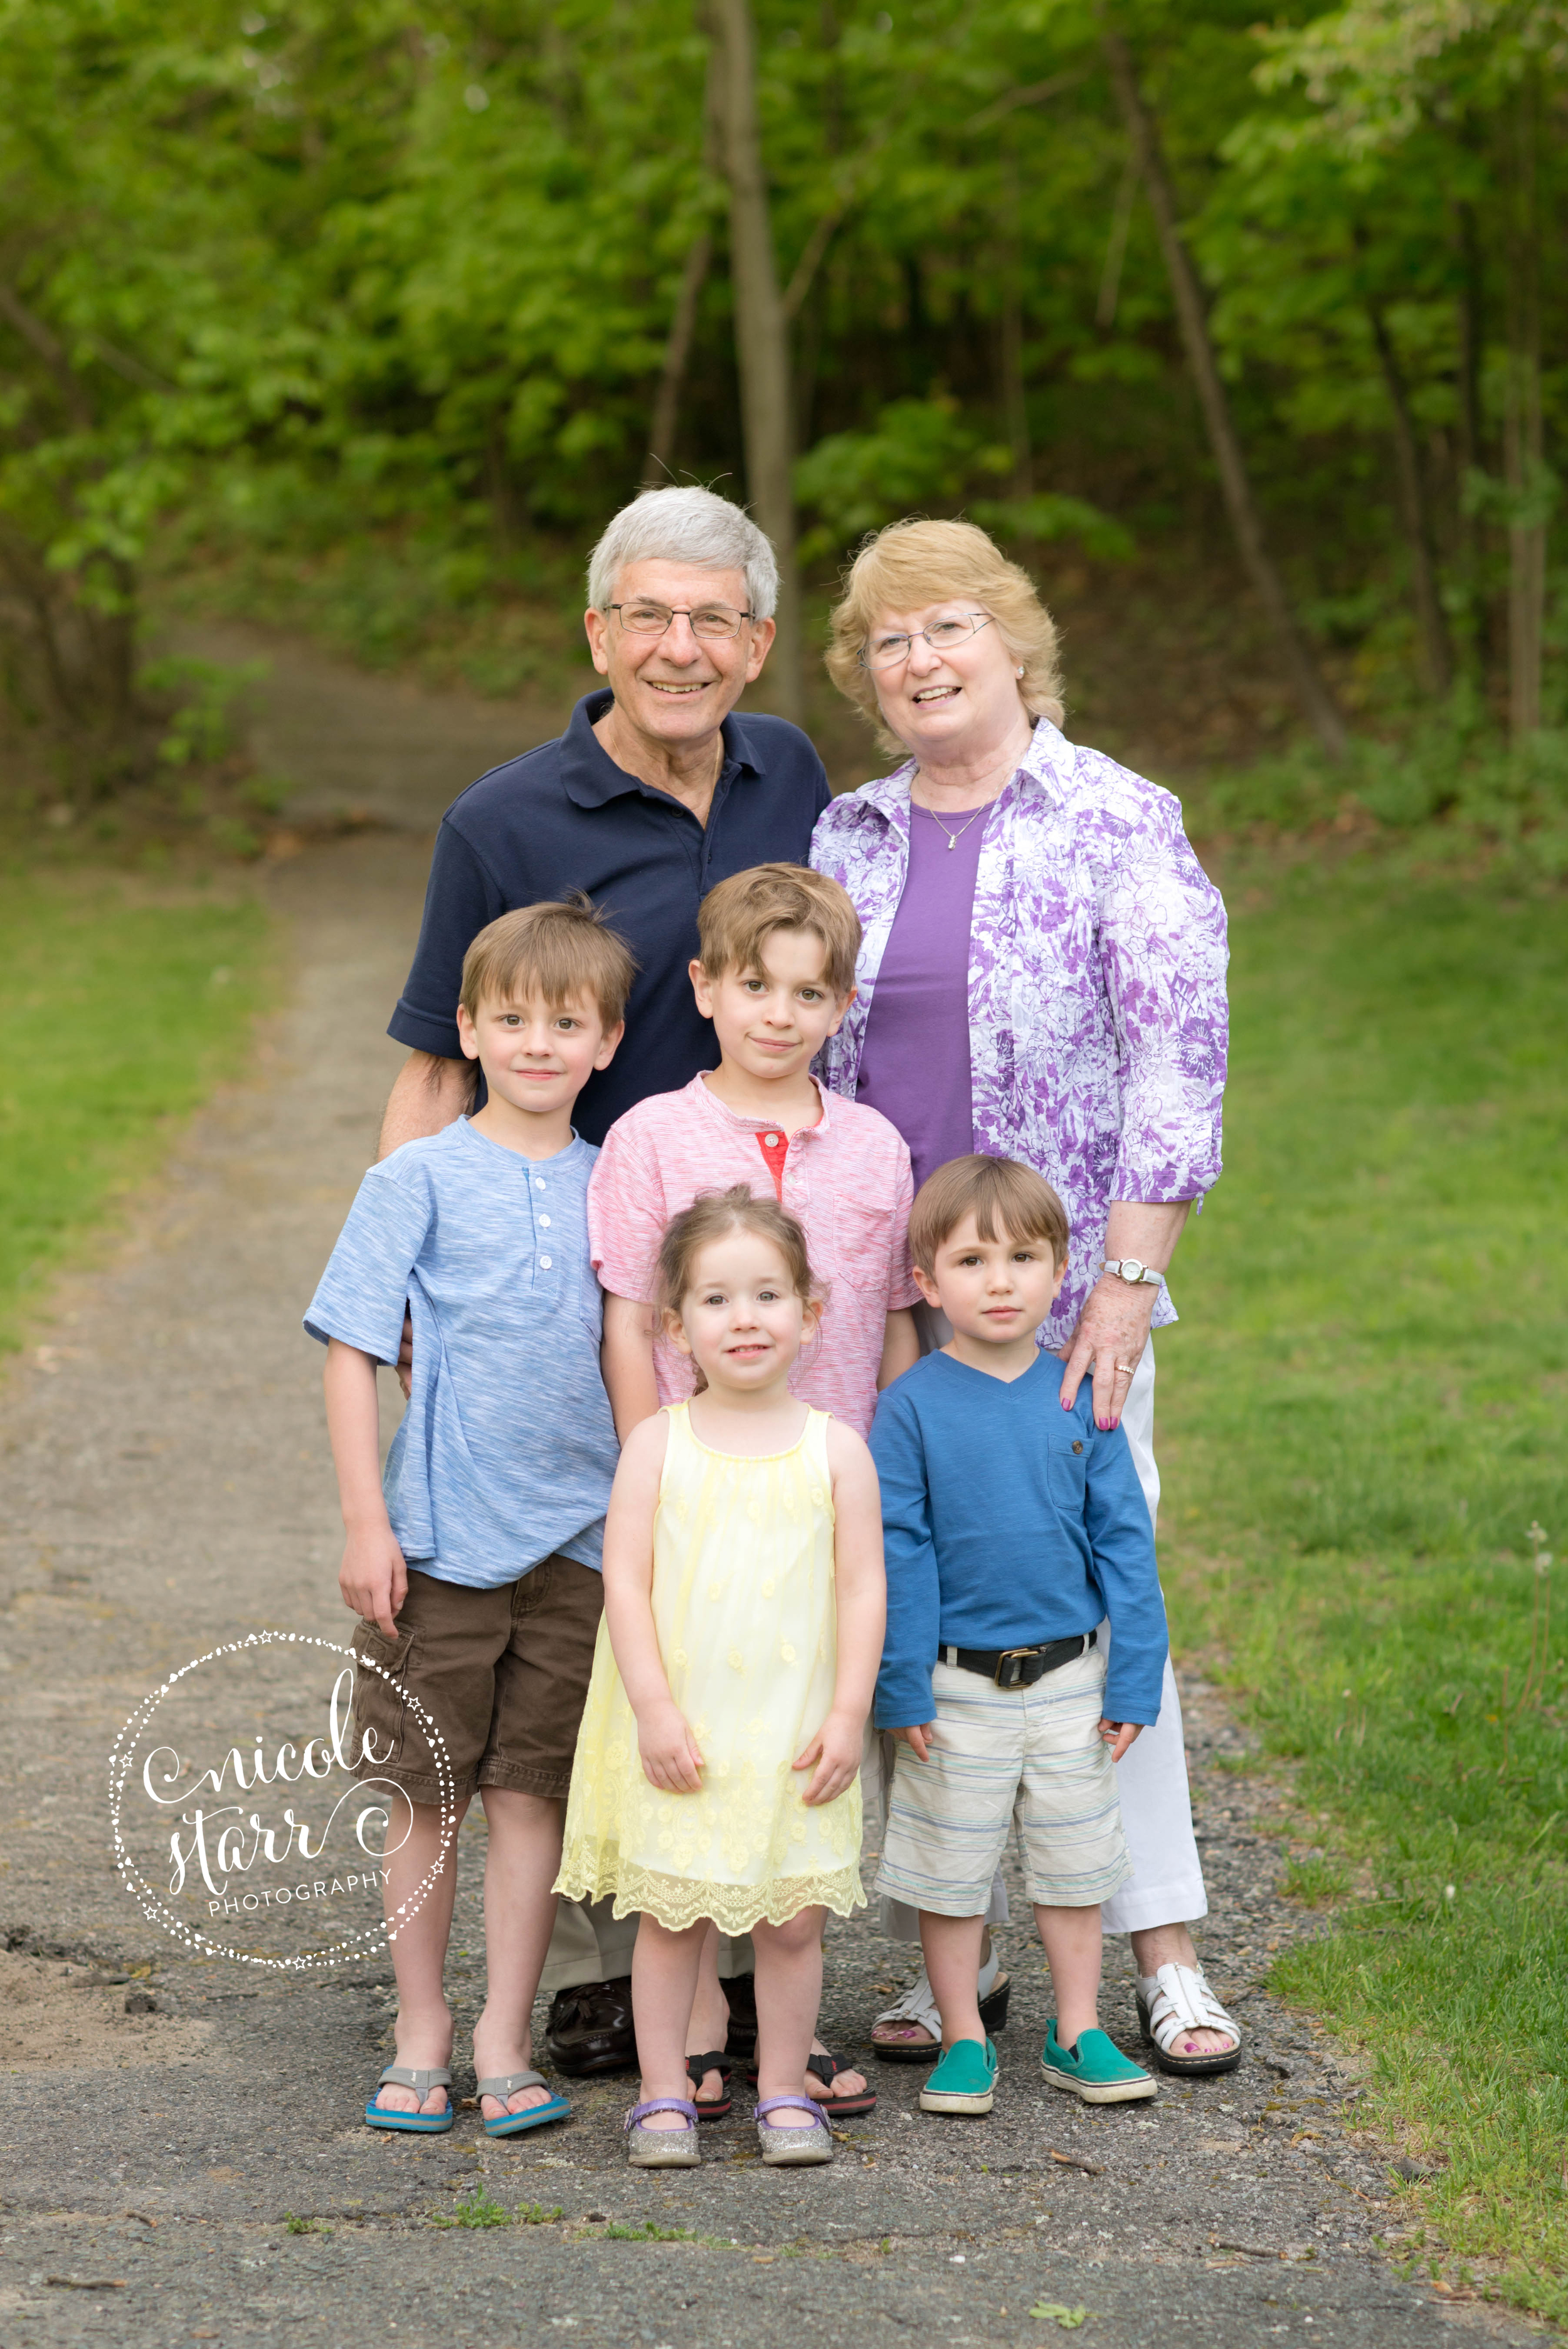 family photo with grandparents and grandchildren